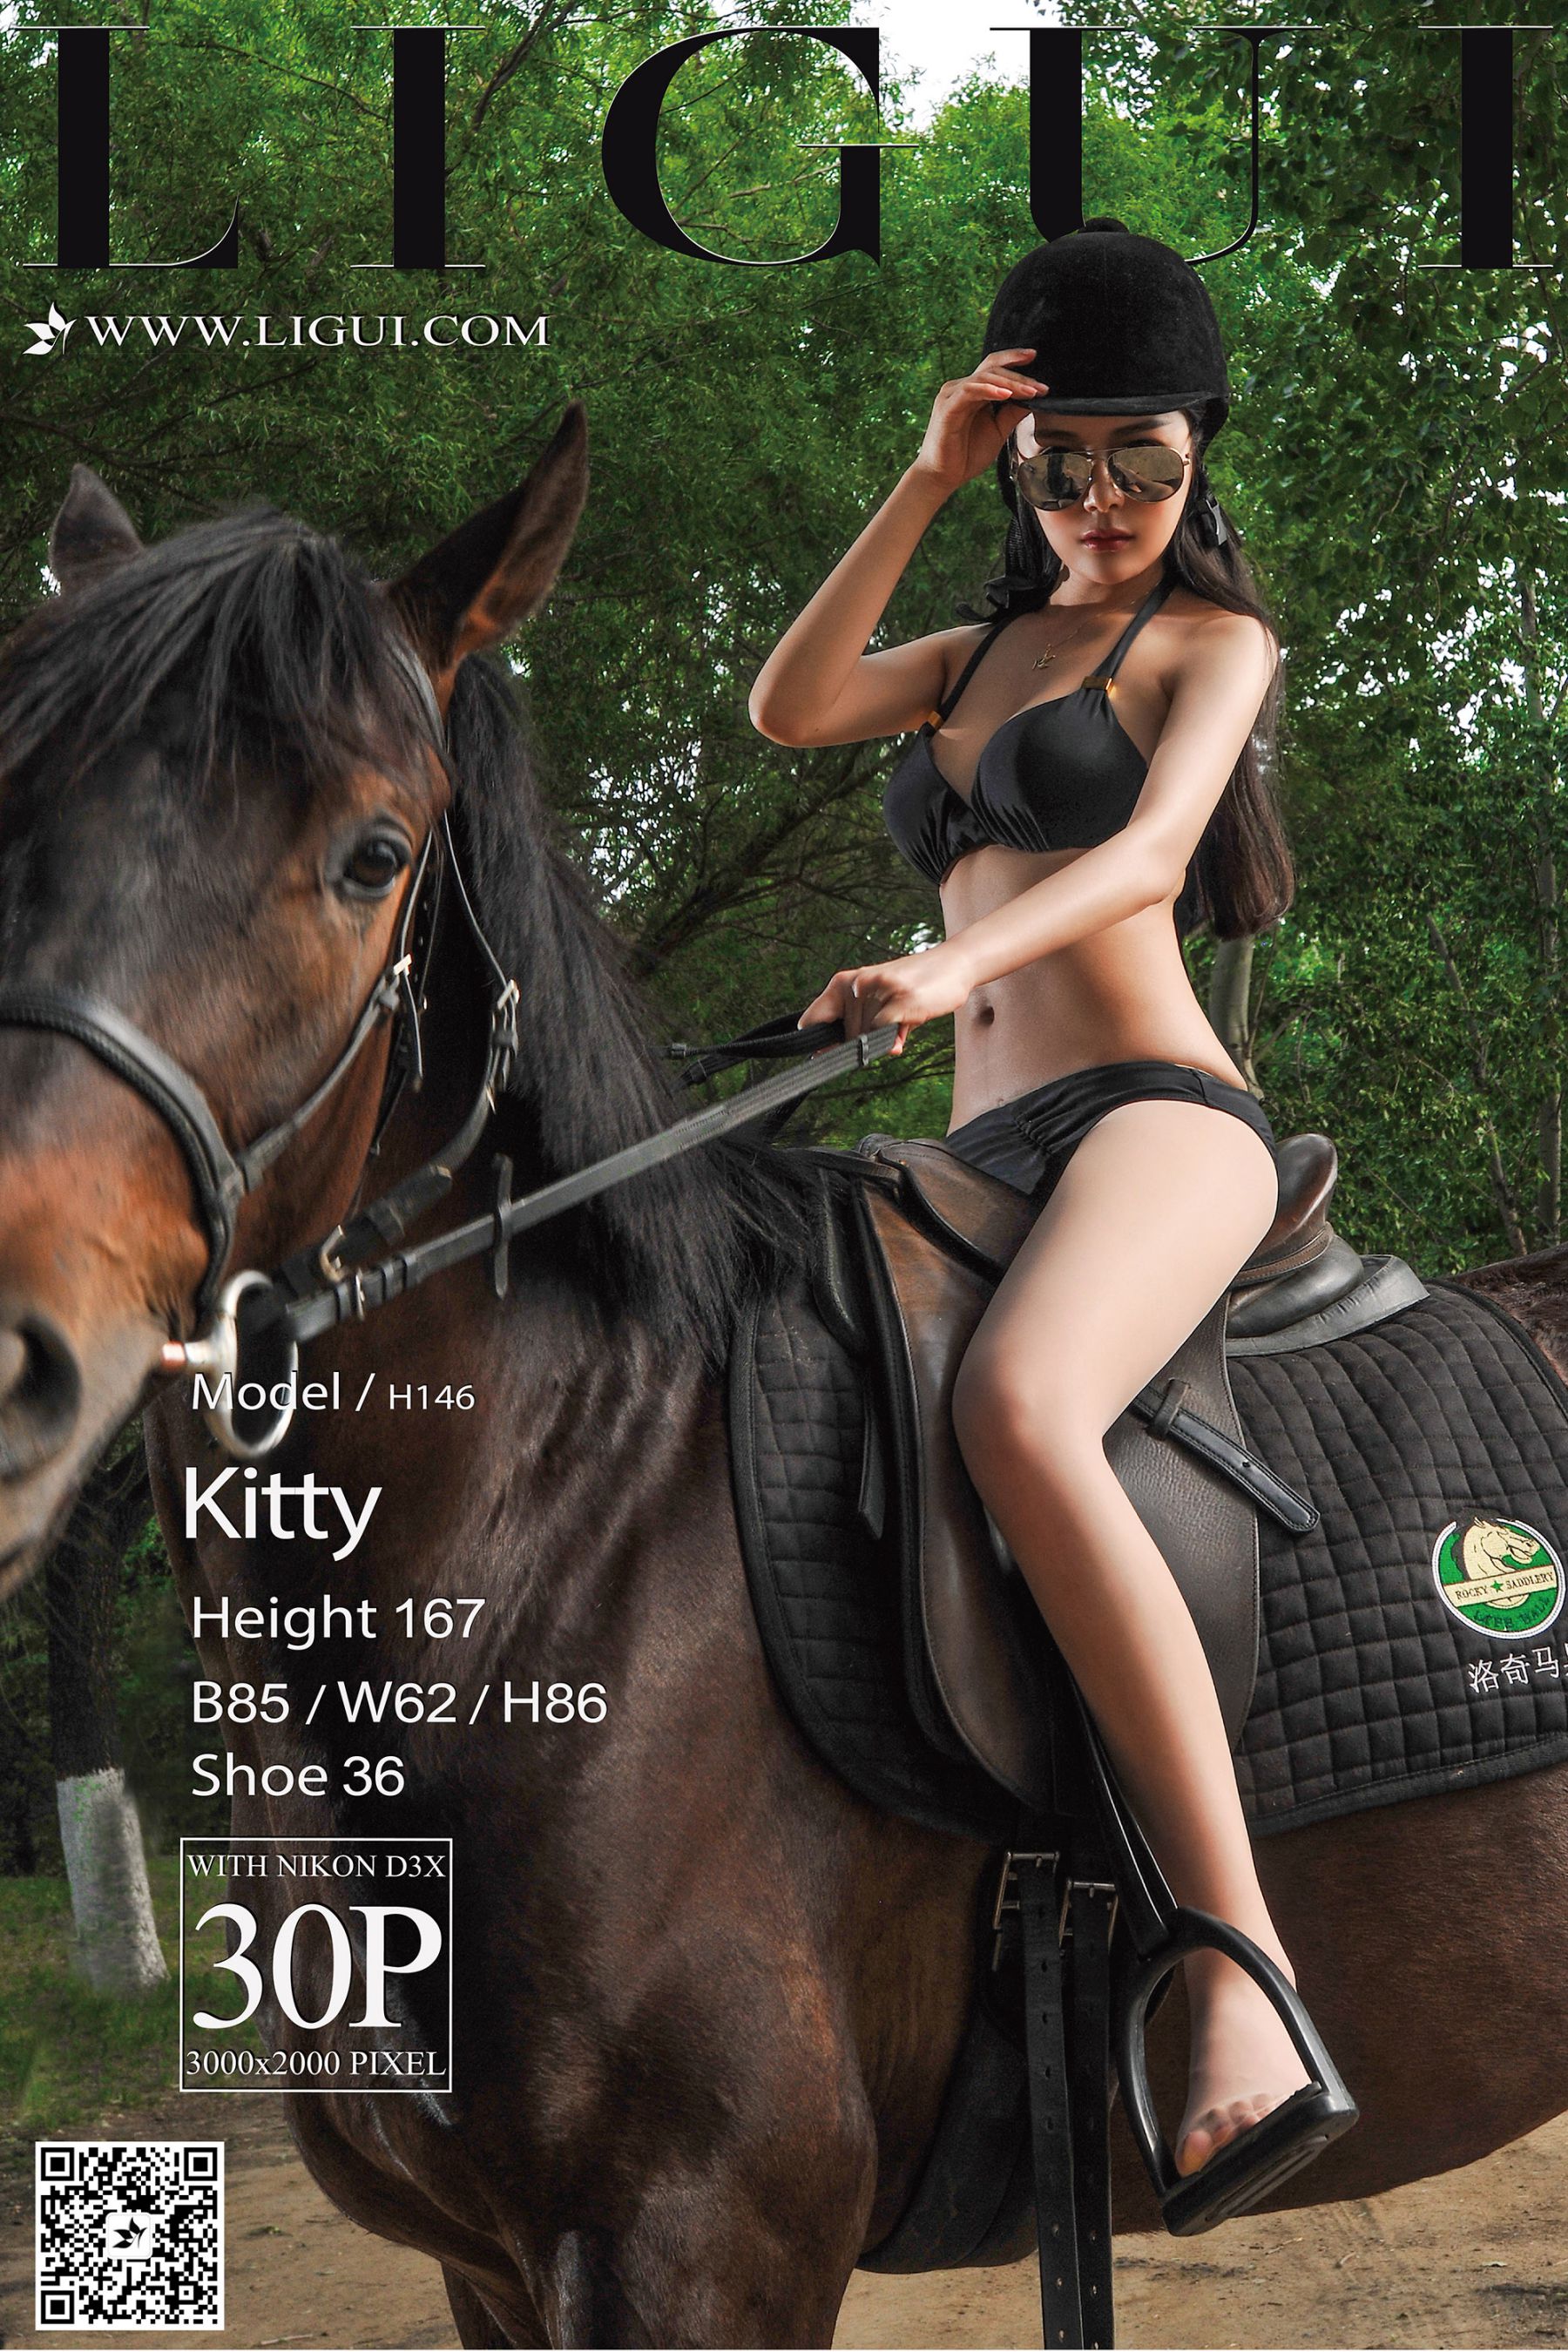 Ligui丽柜 Model Kitty - 骑马的时尚泳装女郎[31](第2页)